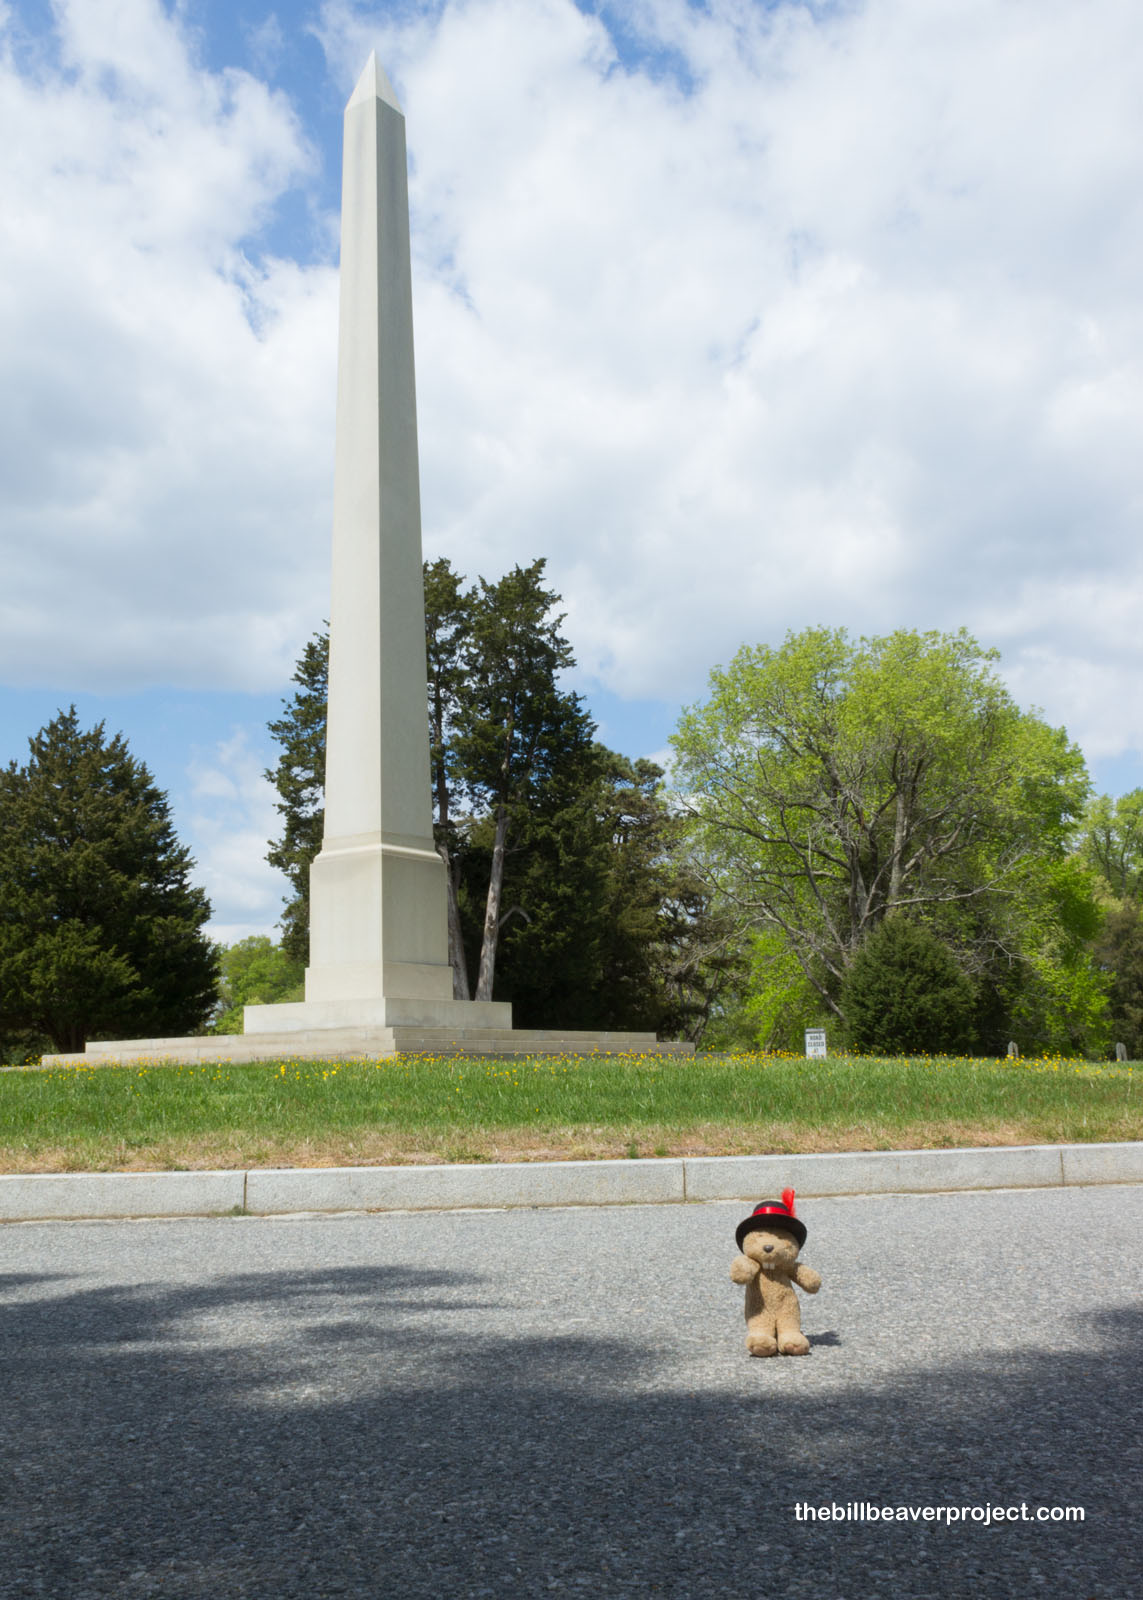 The Memorial obelisk at the park's entrance!